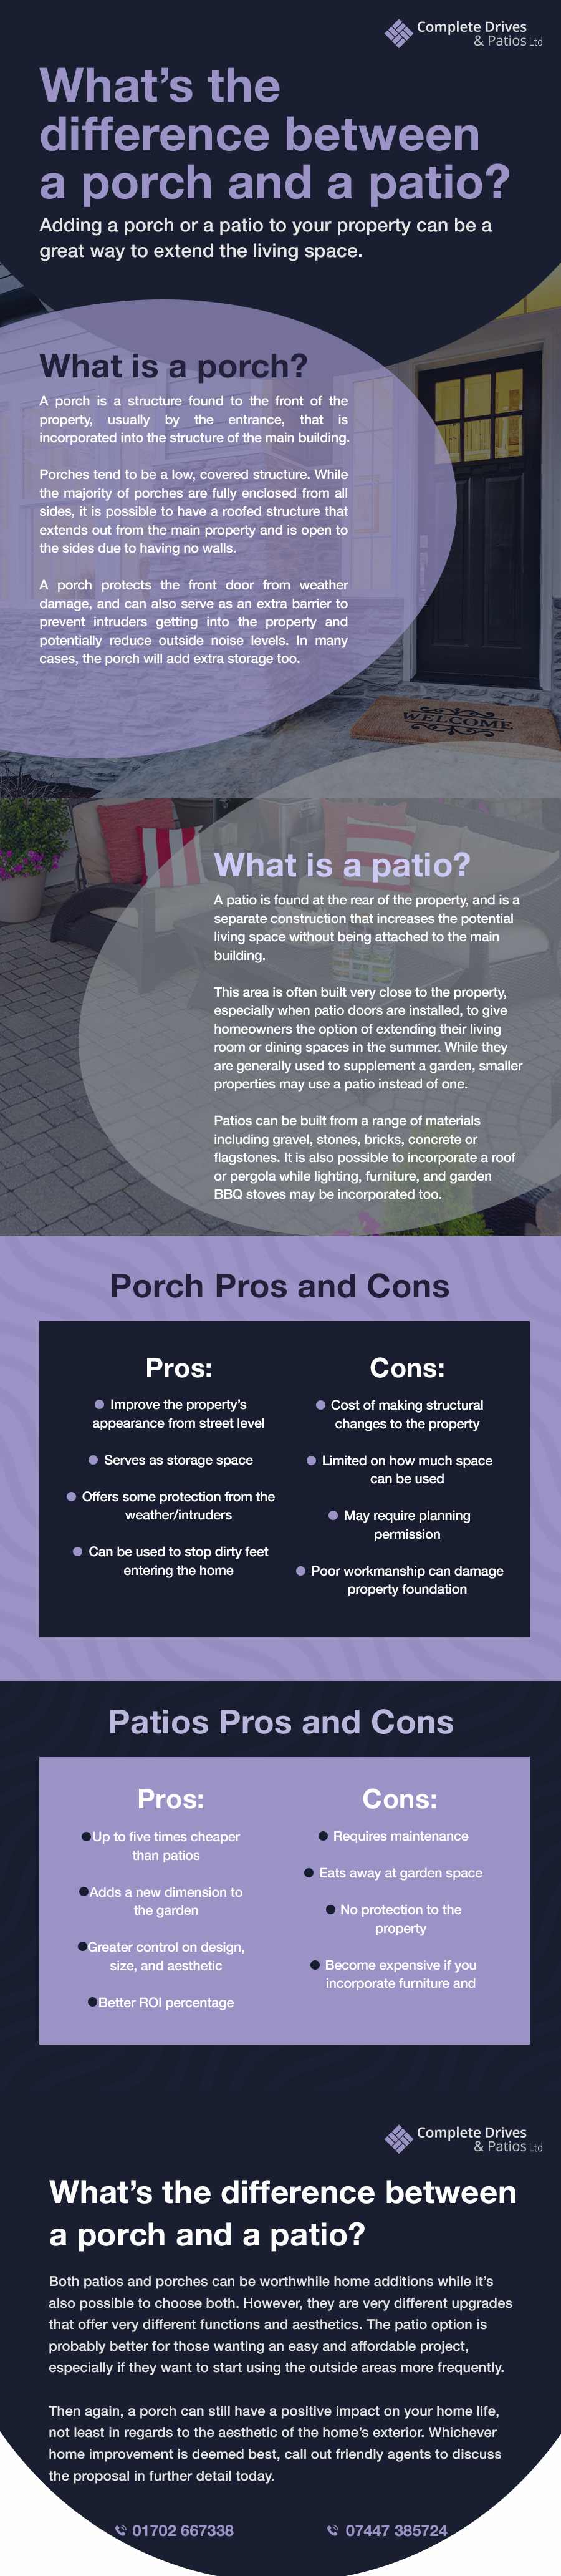 porch vs patio infographic